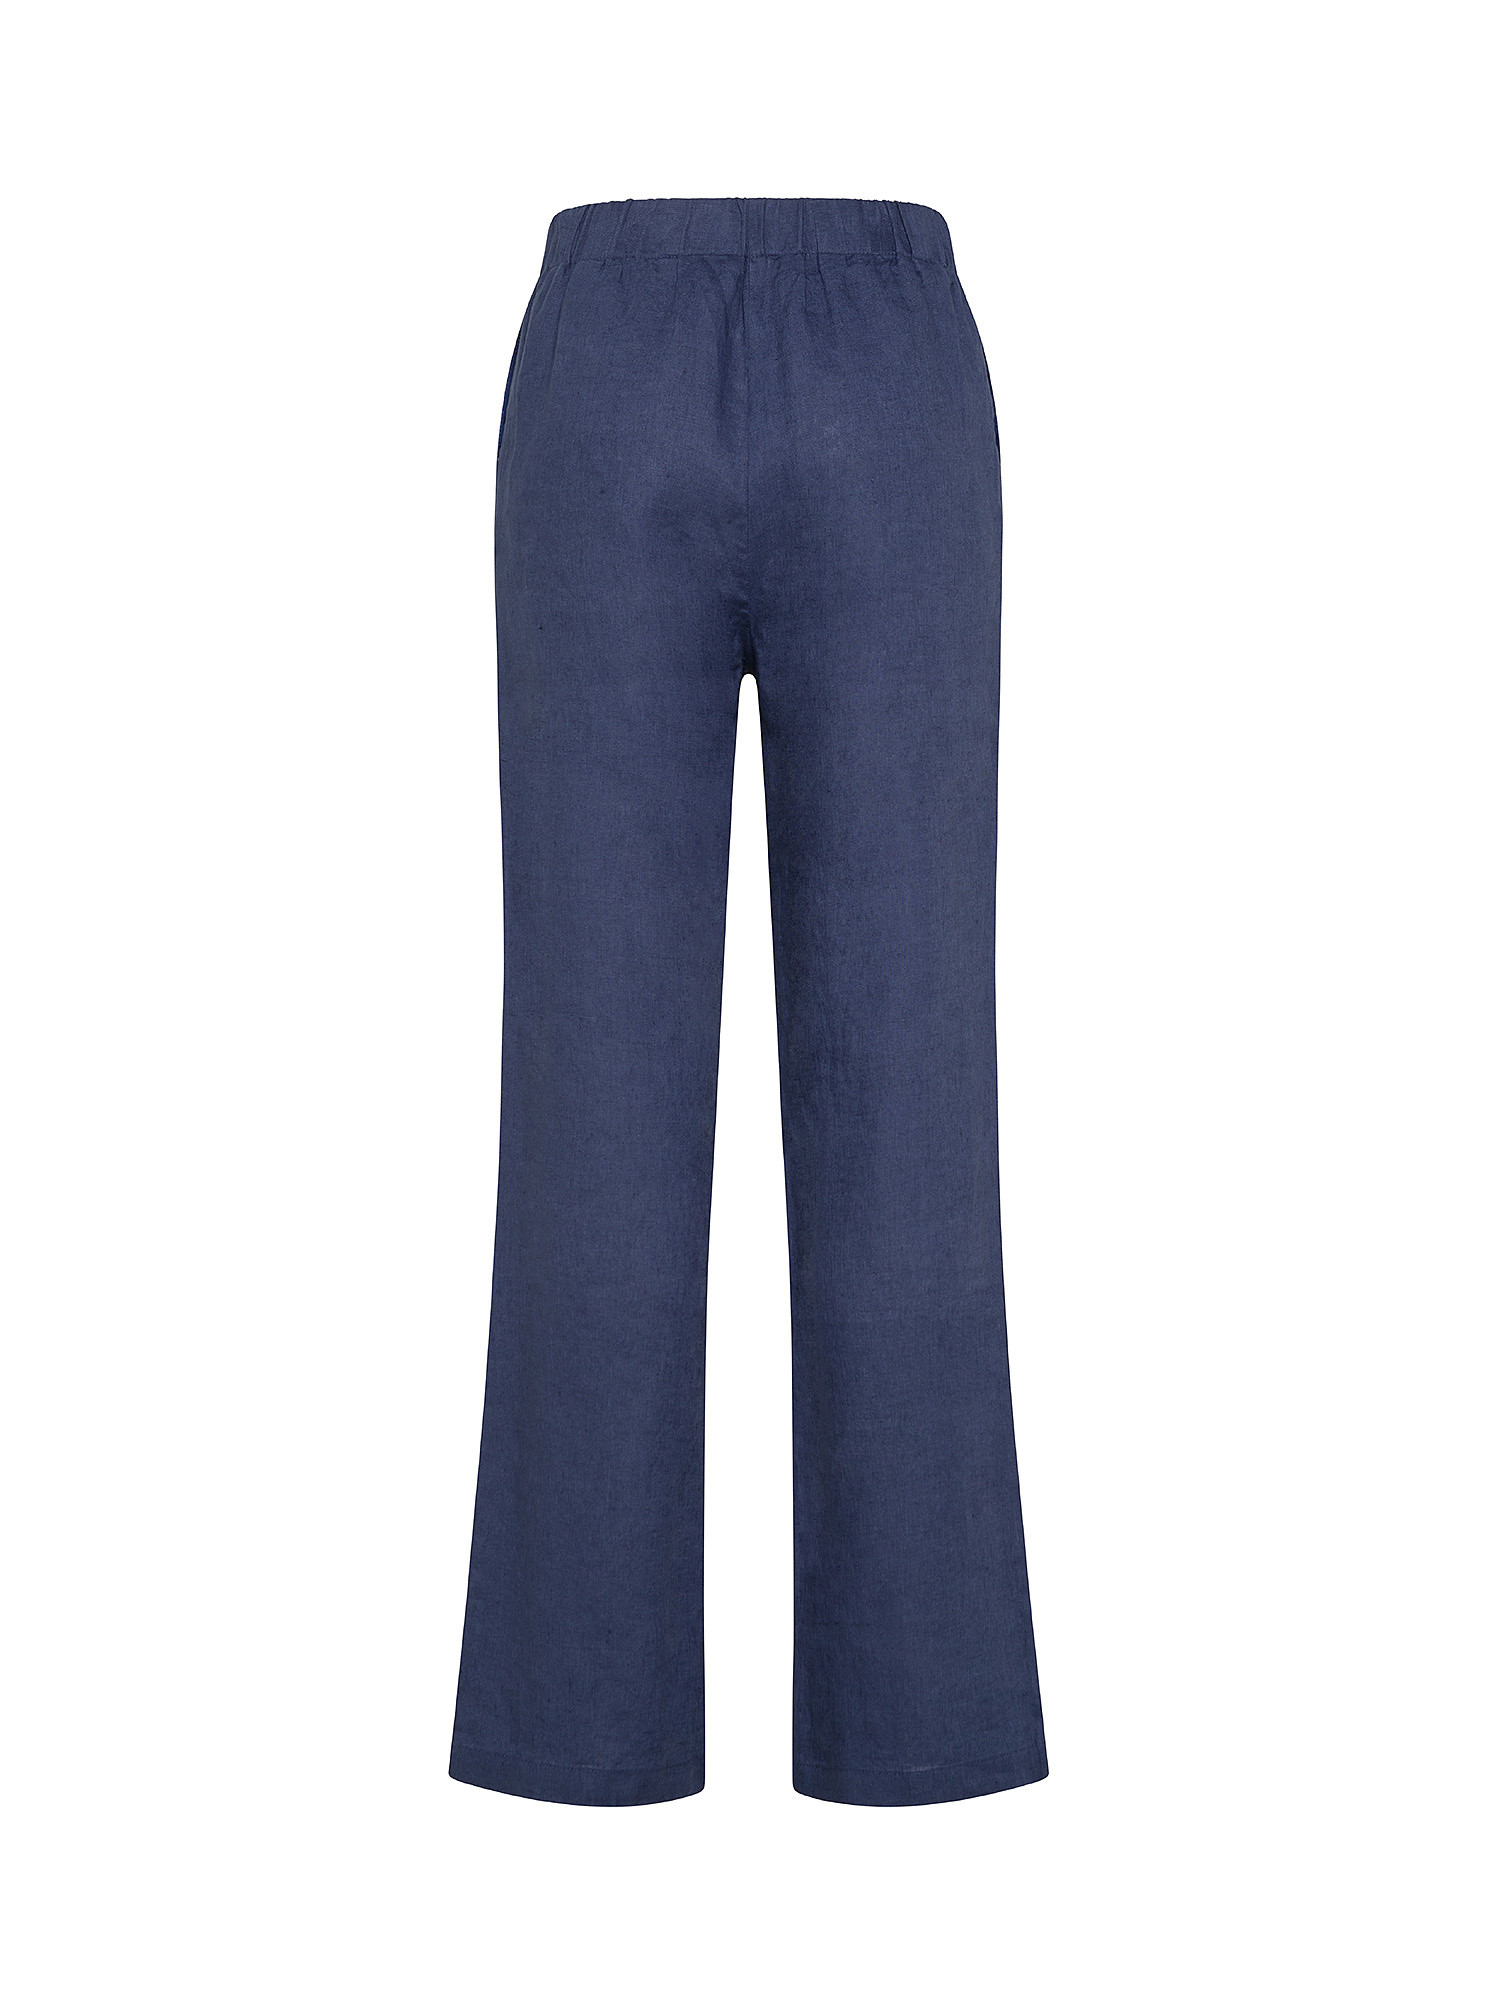 Koan - Pantaloni dritti in lino, Blu, large image number 1